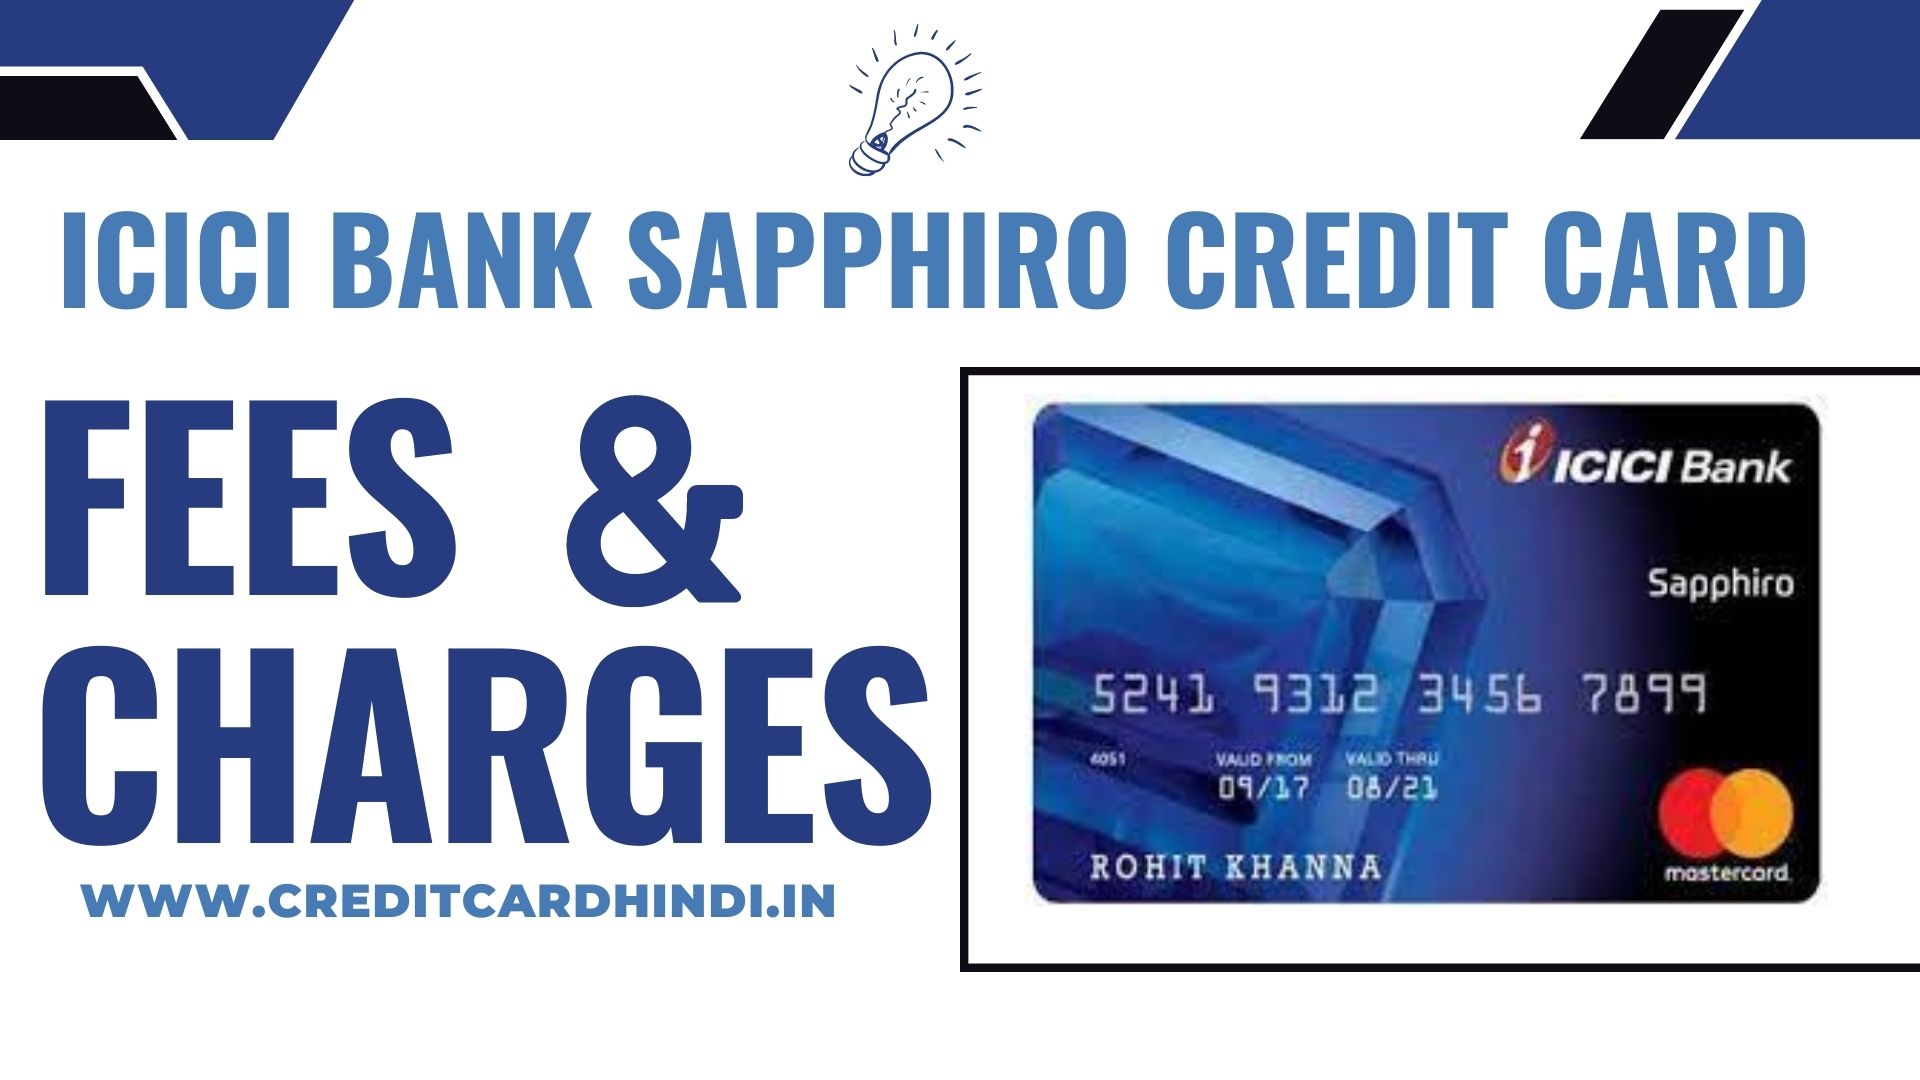 ICICI Bank Sapphiro Credit Card फीस एंड चार्जेस